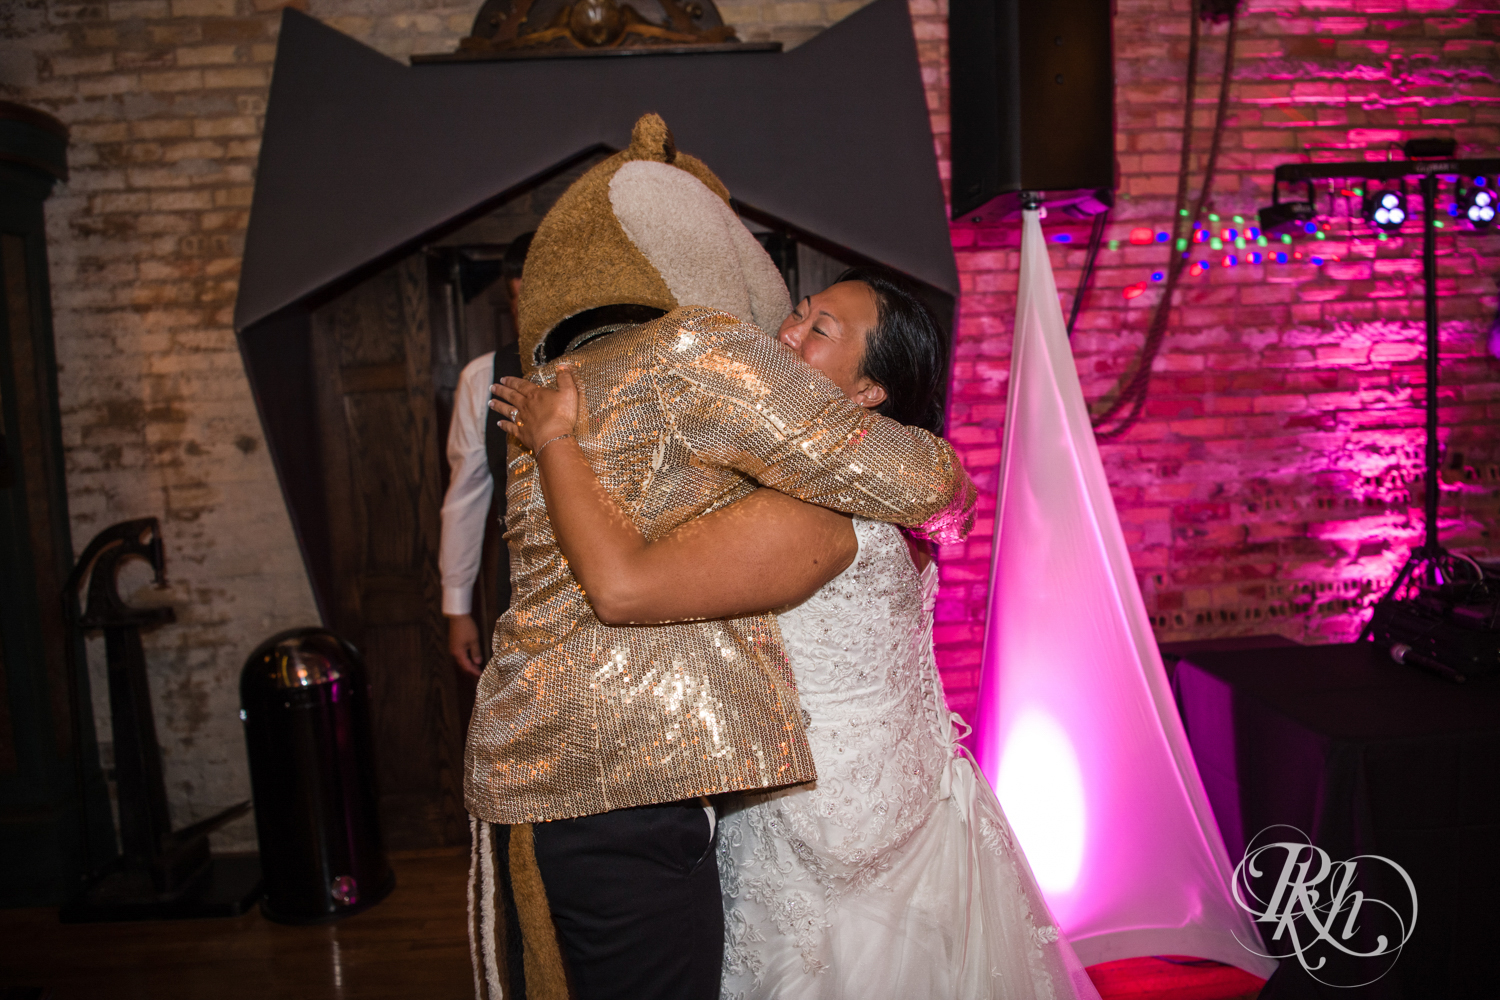 Goldy Gopher hugs bride at wedding reception at Kellerman's Event Center in White Bear Lake, Minnesota.